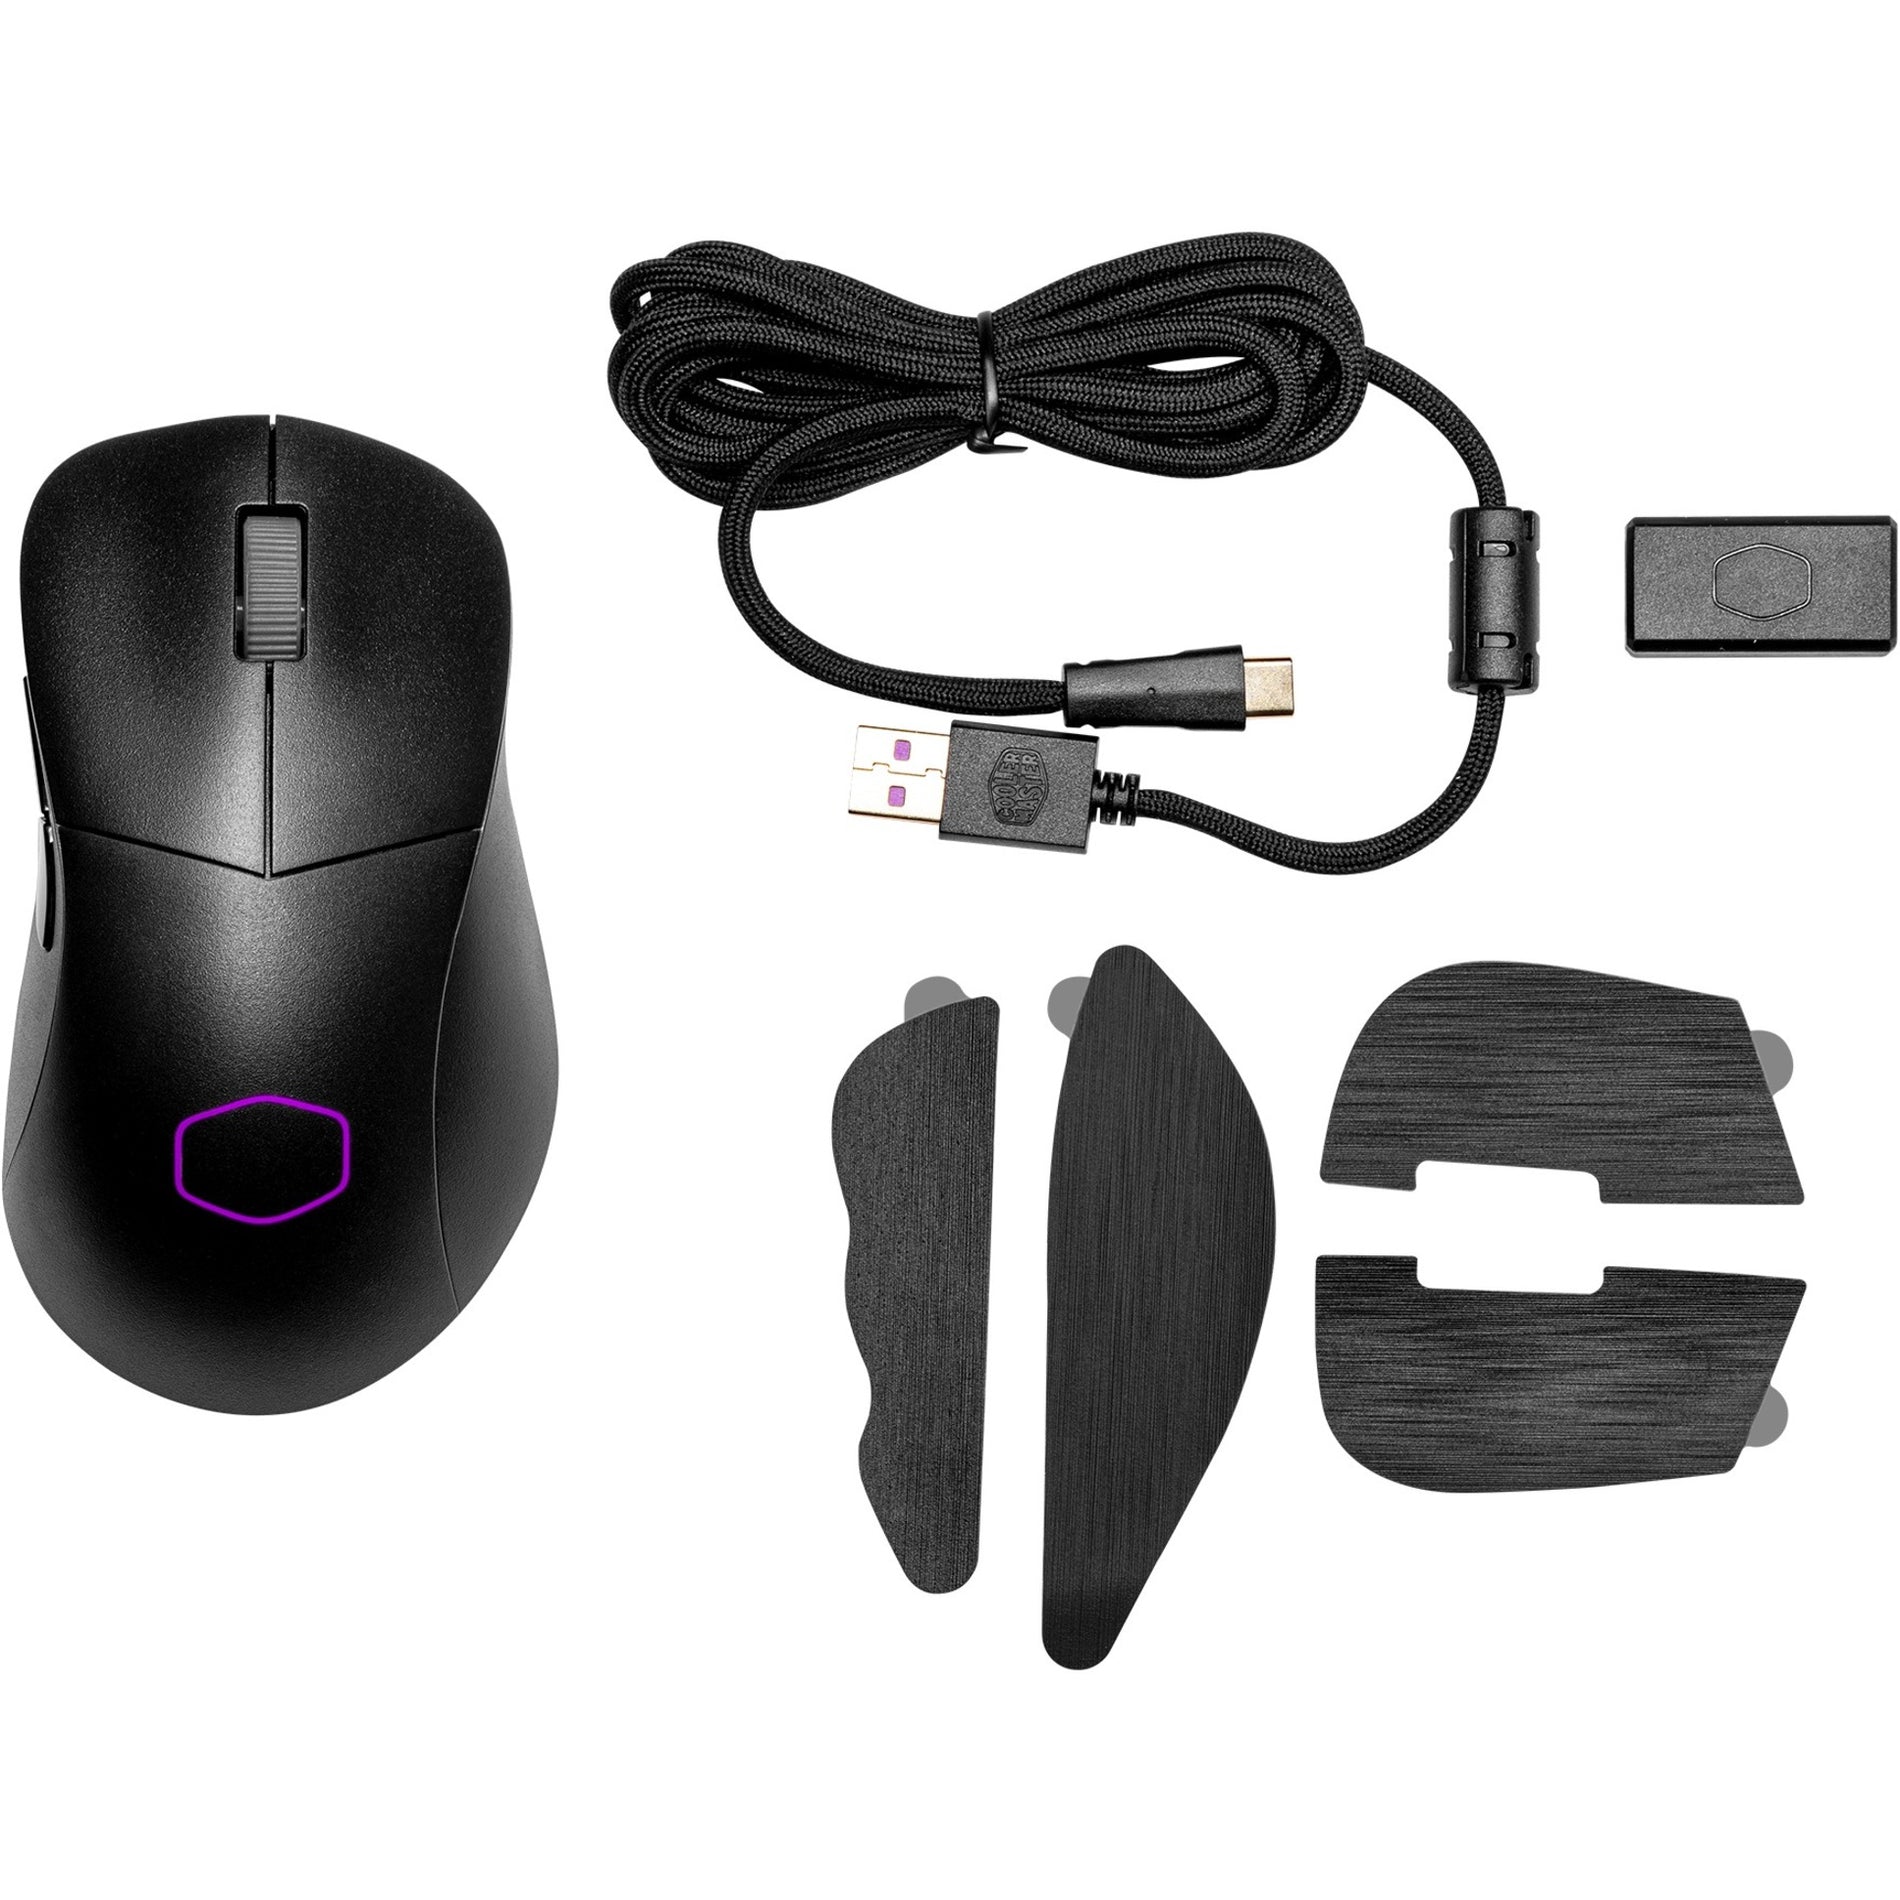 Cooler Master MM-731-KKOH1 MM731 Gaming Mouse, Ergonomic Fit, 19000 dpi, 2 Year Warranty